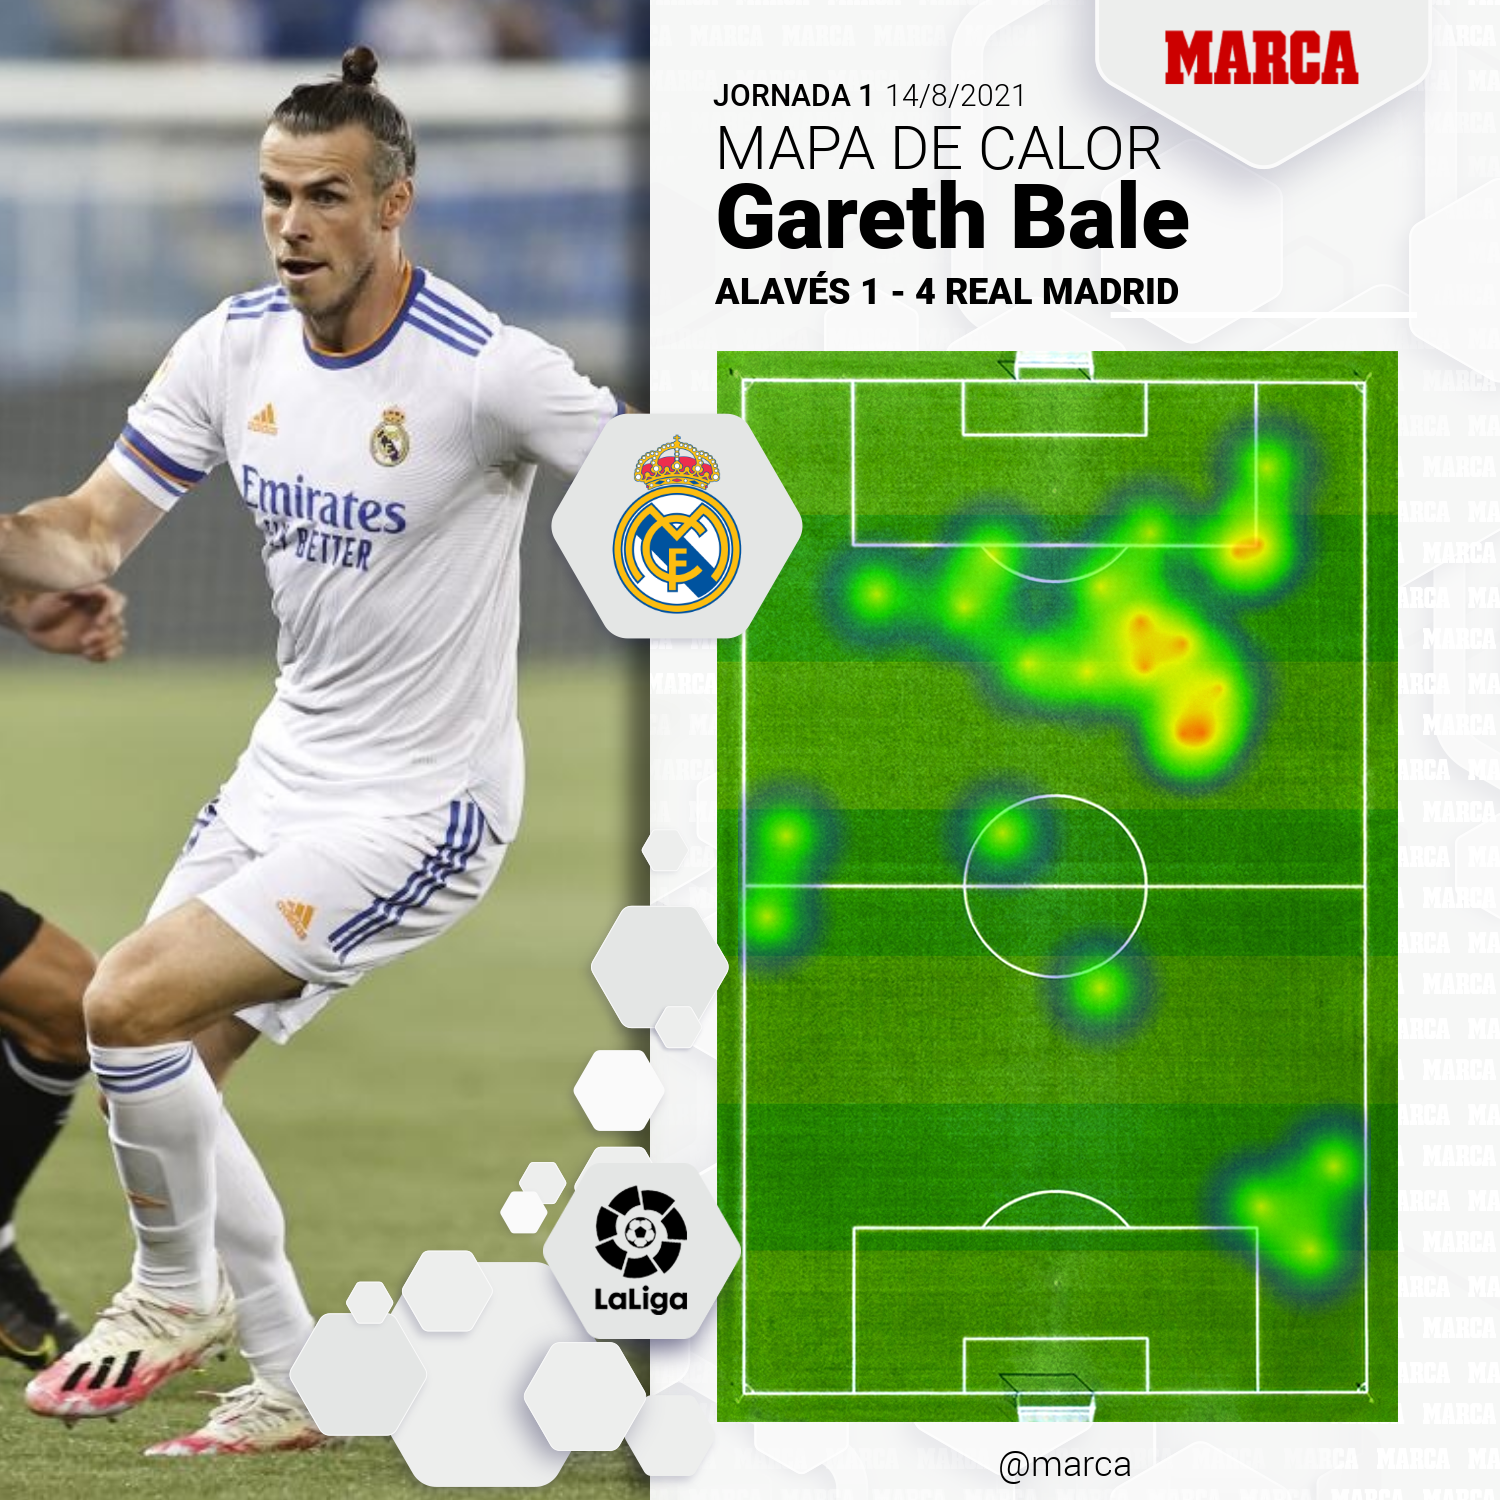 Gareth Bale - Blue Real Madrid Jersey. 2013/2014 season